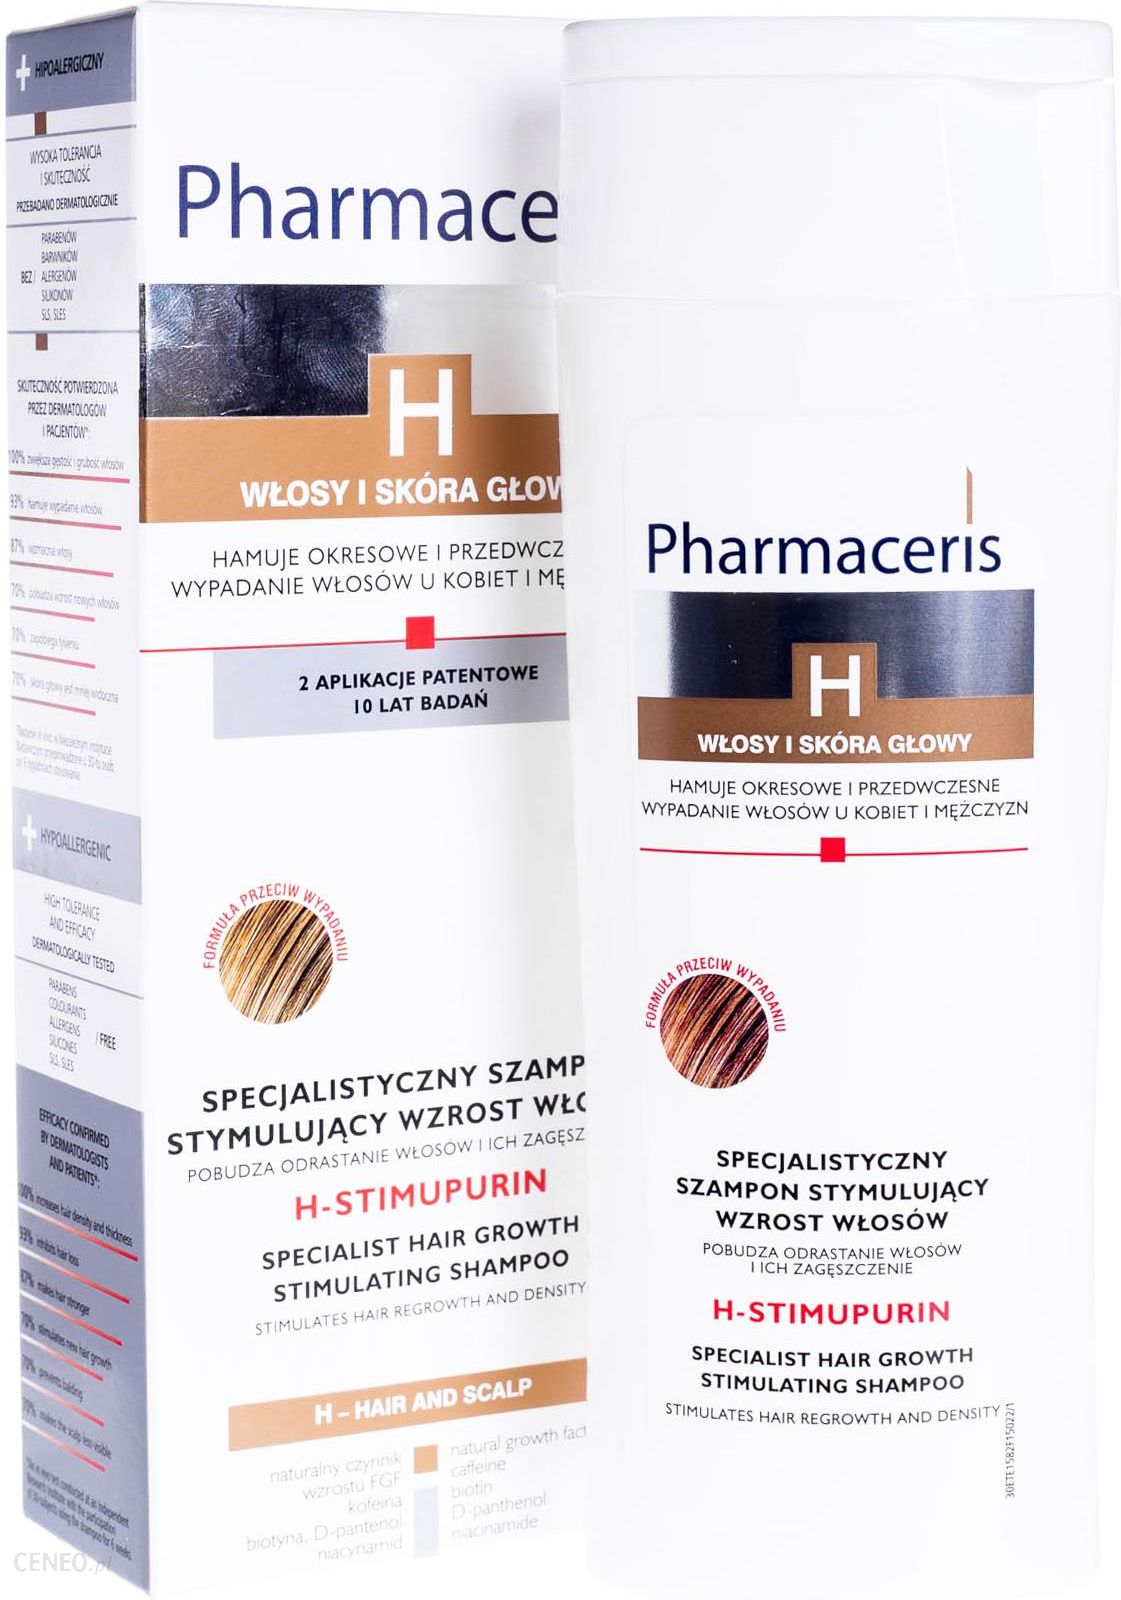 szampon pharmaceris h stimuclaris ceneo